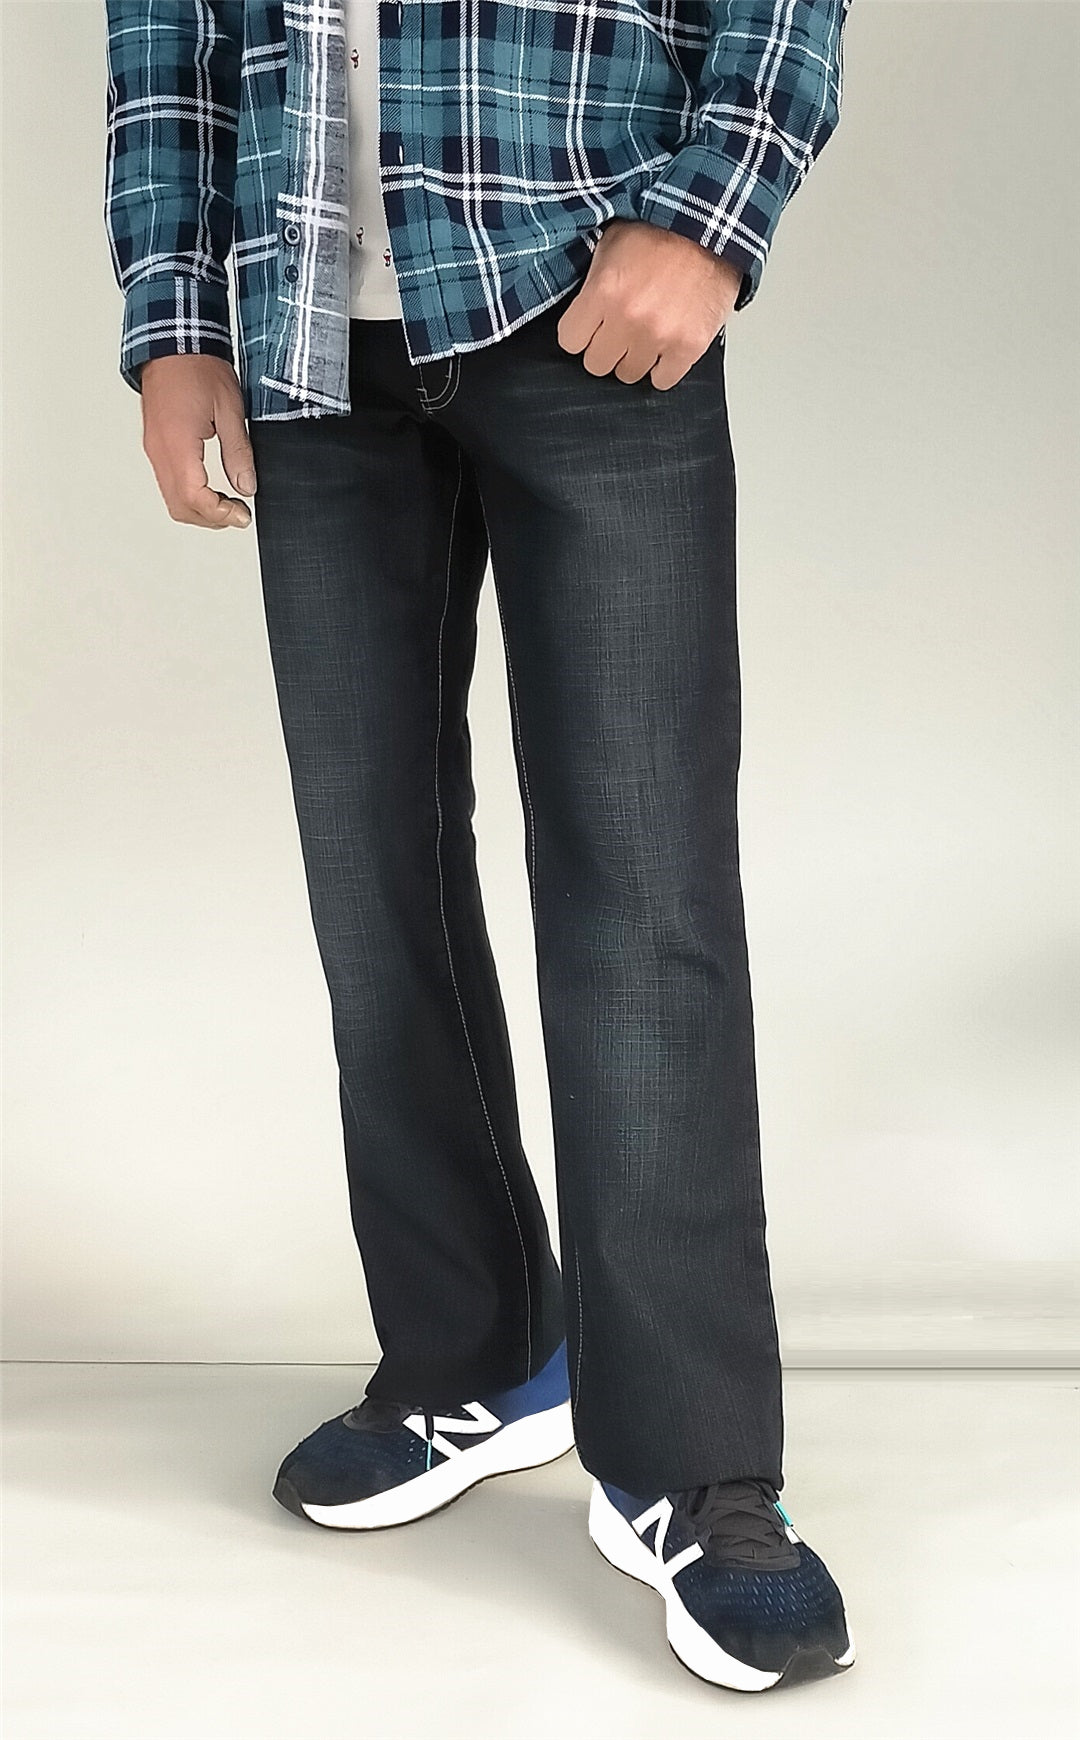 Men JEANIUS JEANS Thomas Slim Bootcut Jeans in black - Mid rise